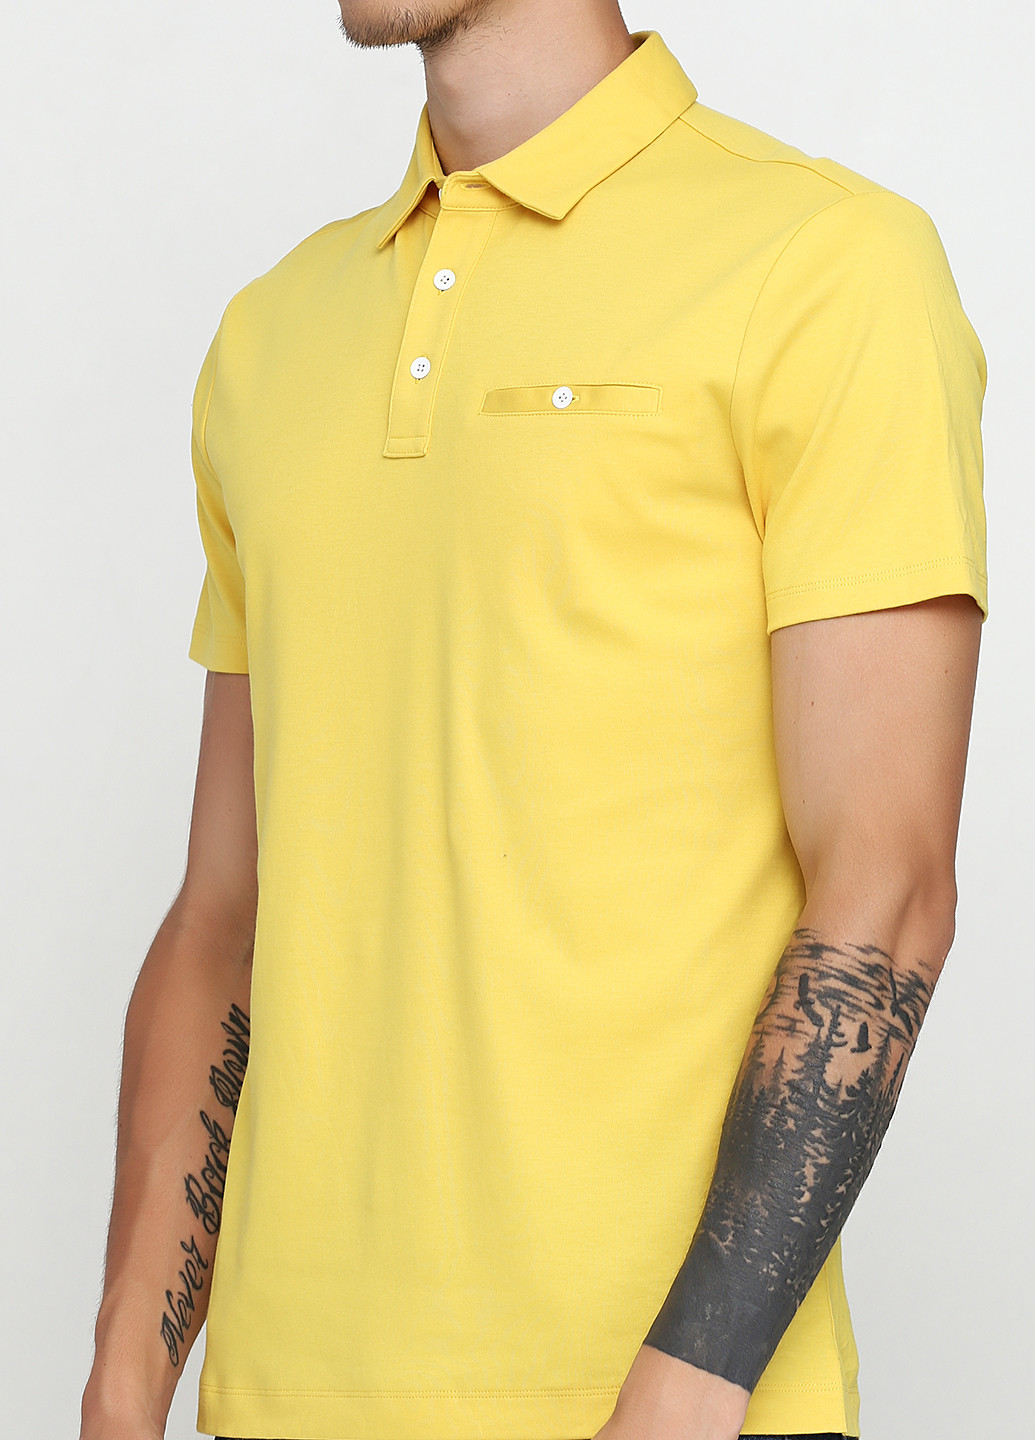 Желтая футболка-поло для мужчин Banana Republic однотонная